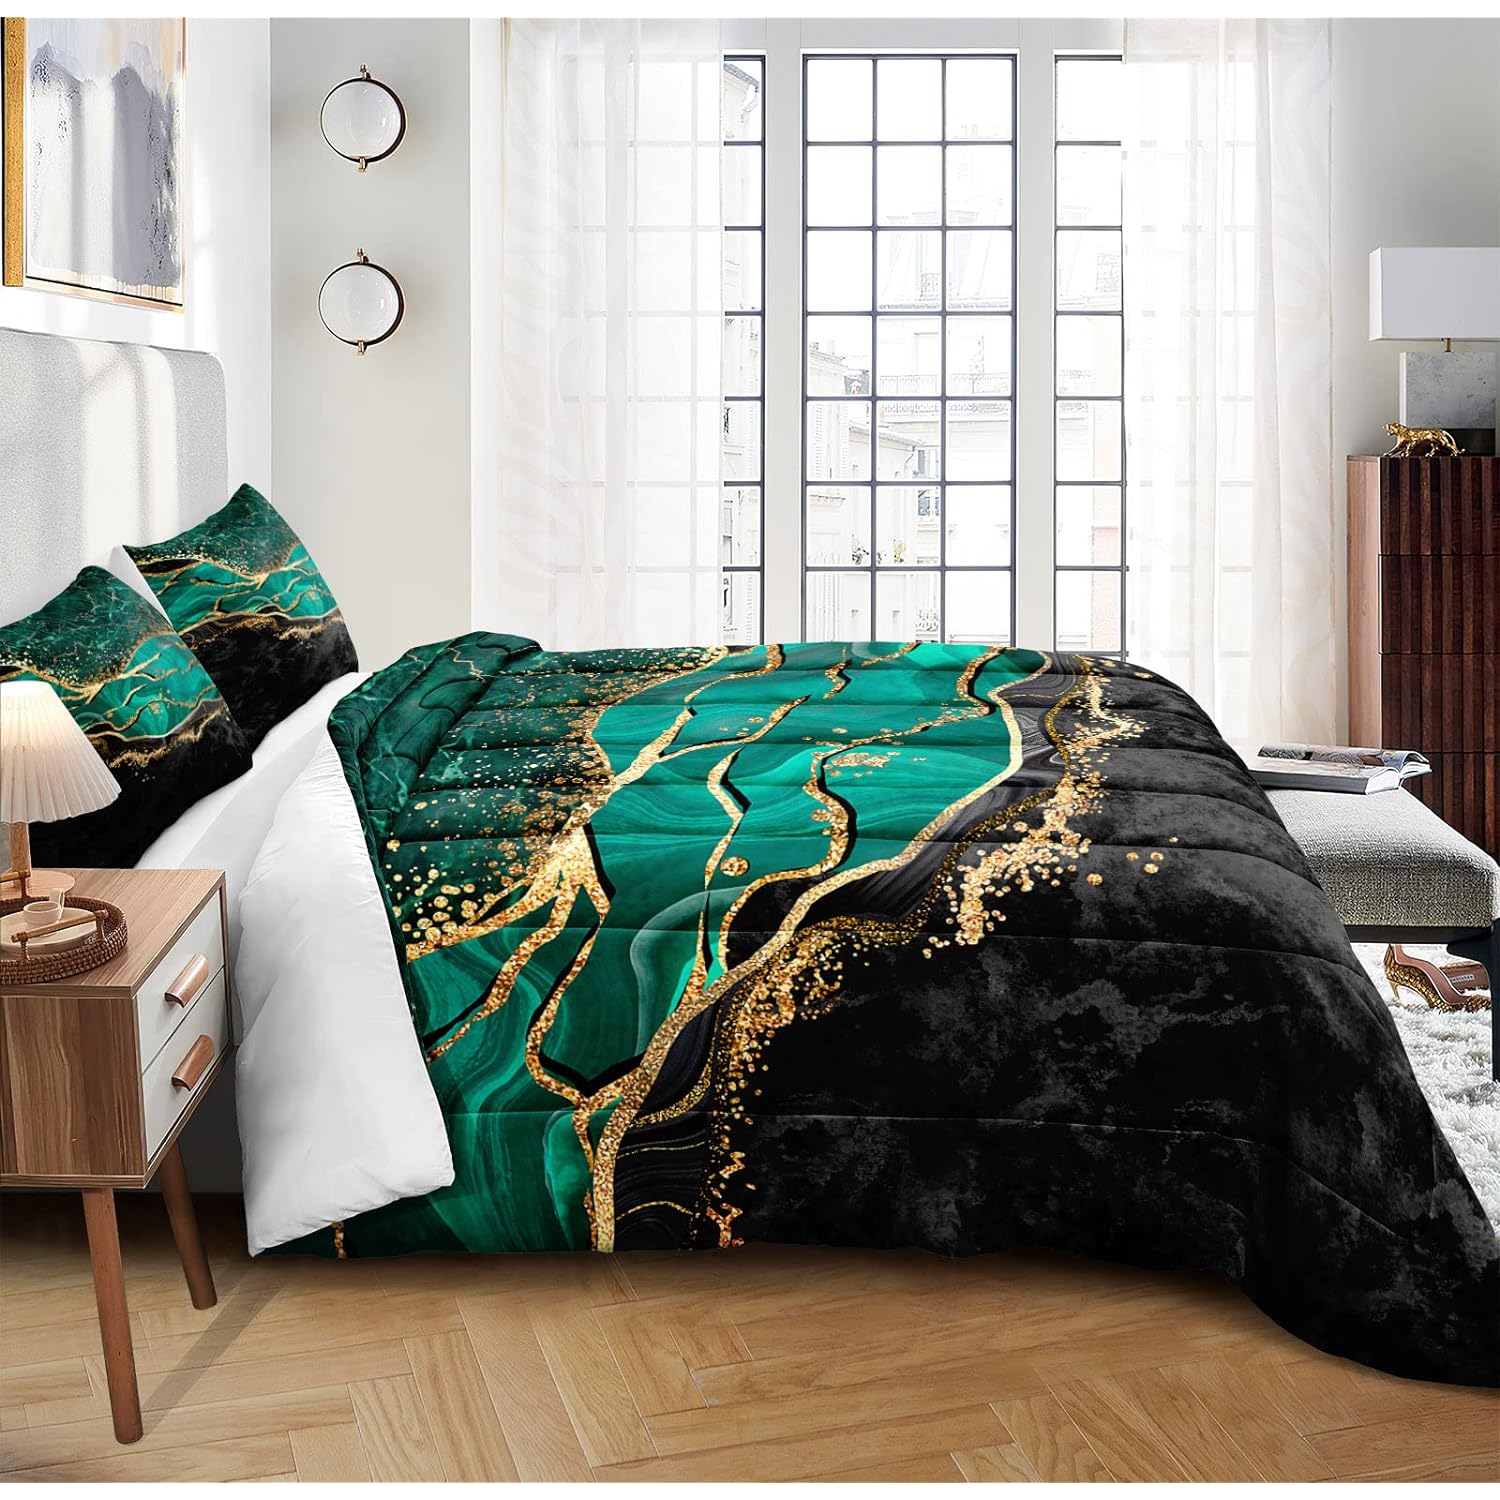 Great Choice Products Queen Comforter Set Emerald Green, Marble Bedding Comforter Set, Metallic Foil Print Black Gold Bedding Dark Green Abstr…